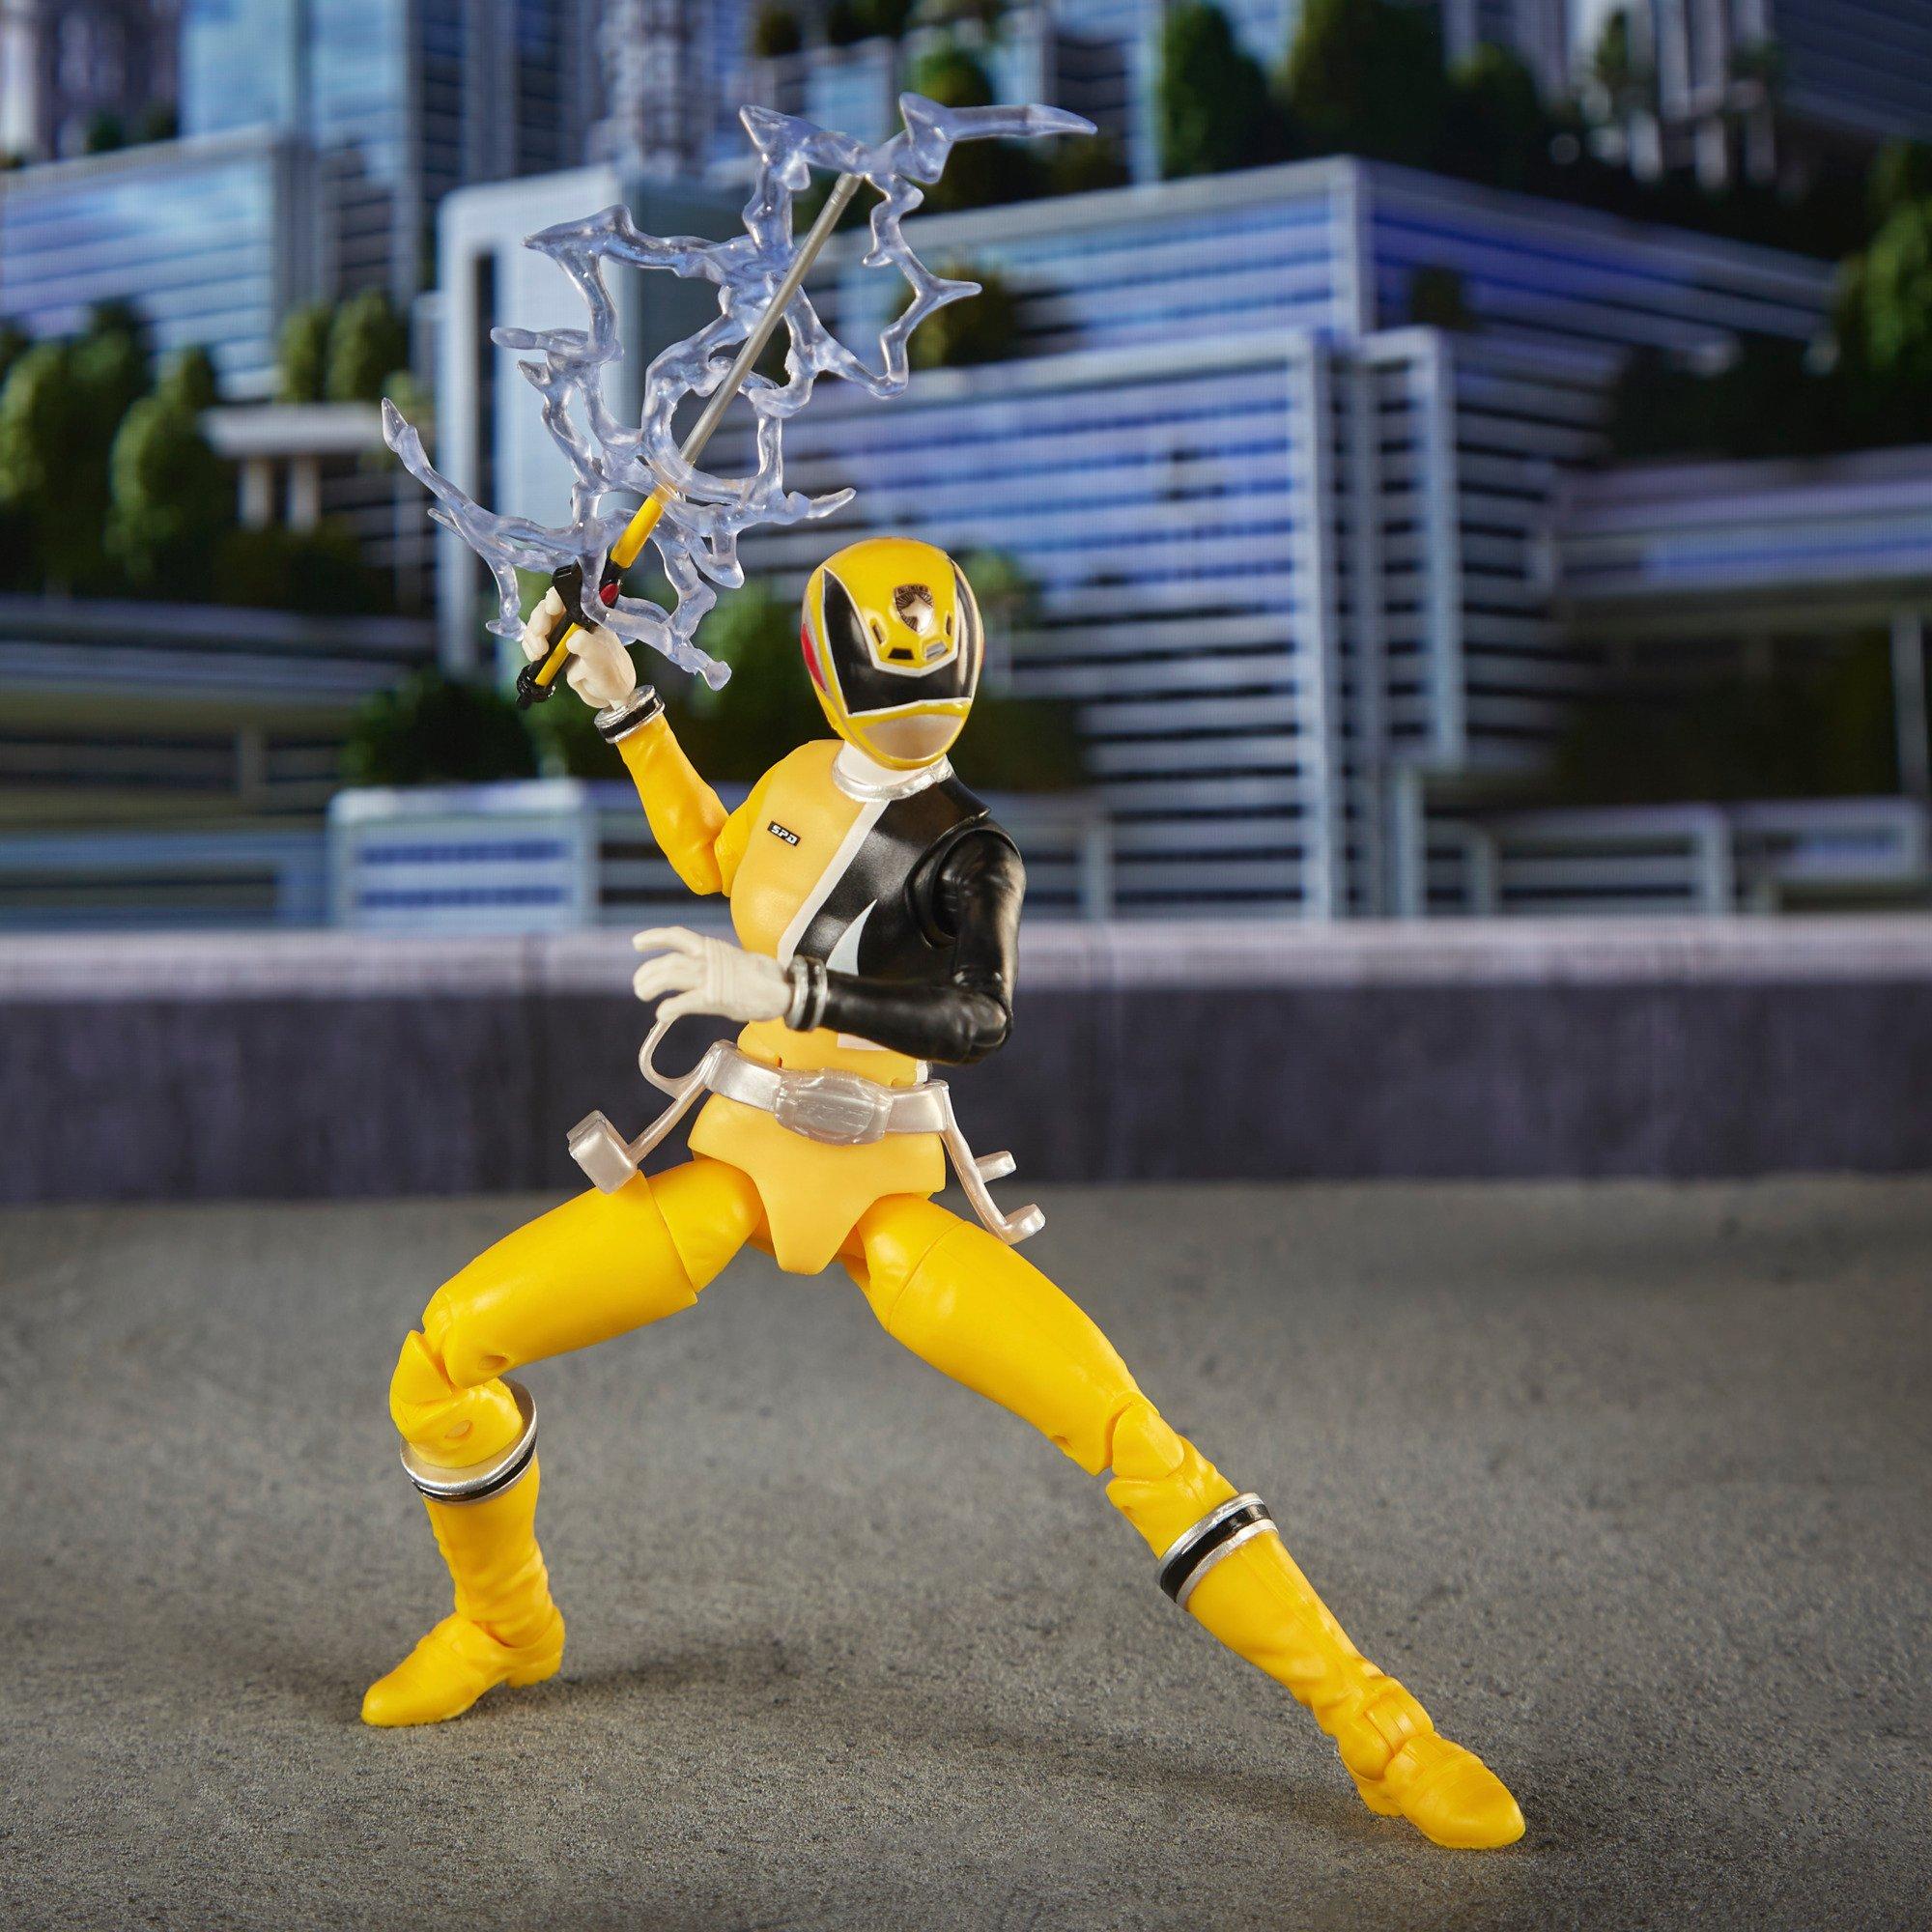 power ranger super samurai yellow ranger